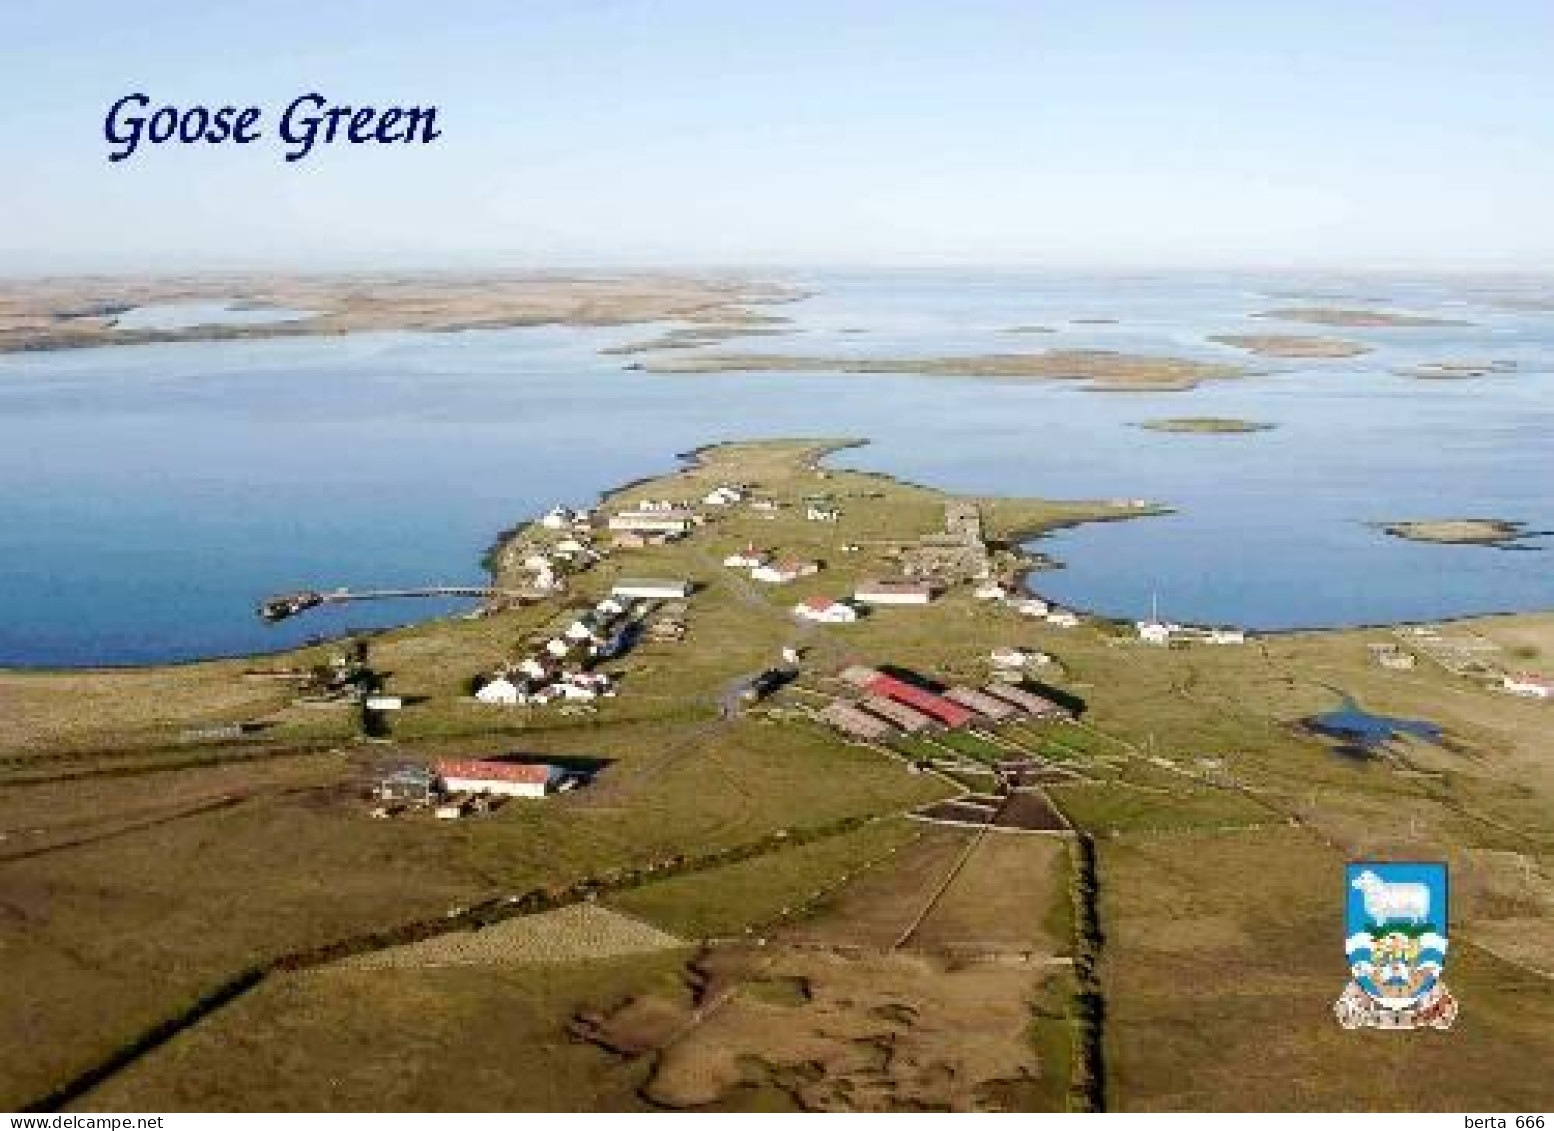 Falklands Islands Goose Green Malvinas New Postcard - Falkland Islands